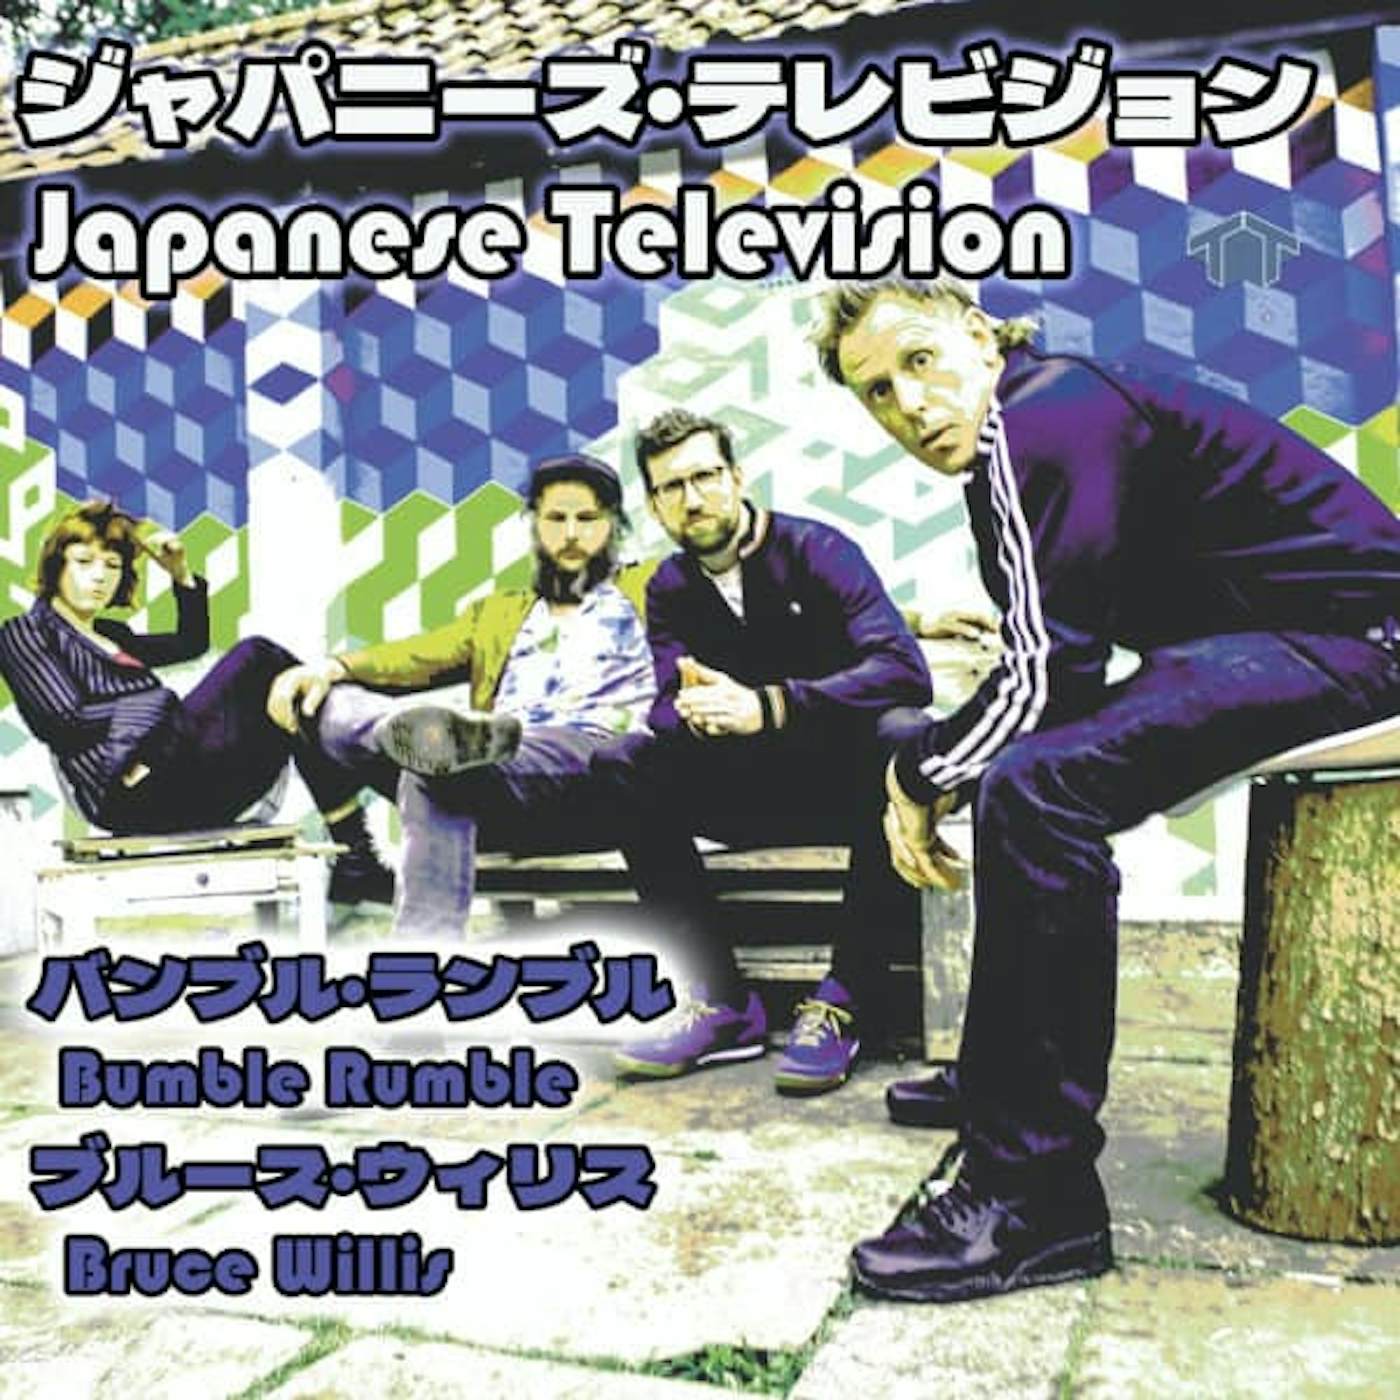 Japanese Television Bumble Rumble / Bruce Willis Vinyl Record